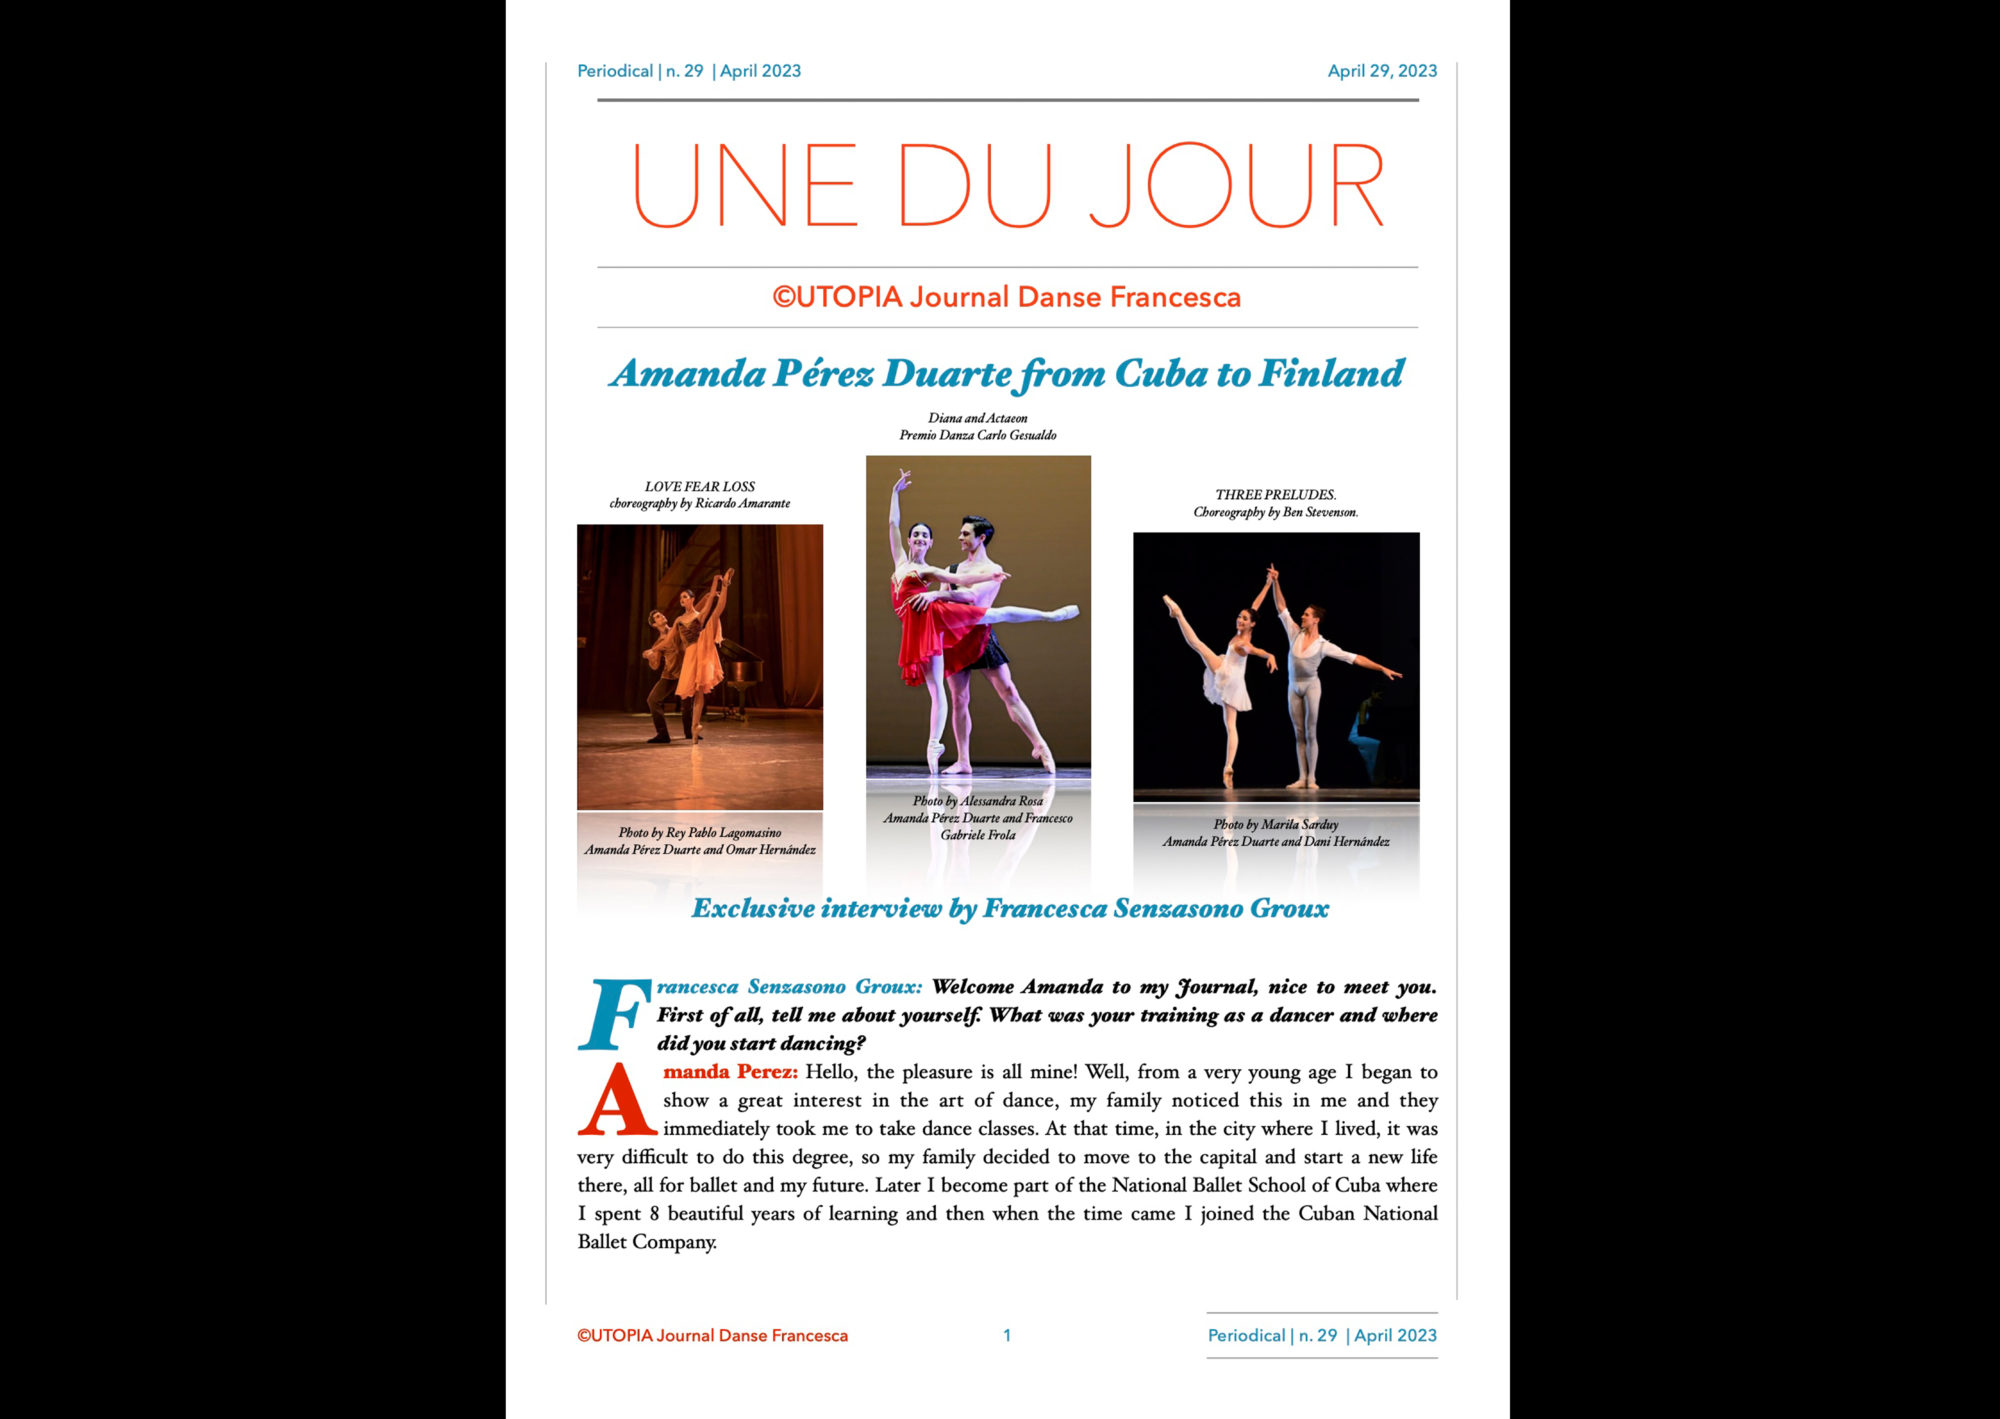 ©UTOPIA Journal Danse Francesca Periodical n.29 April 29, 2023 page 1